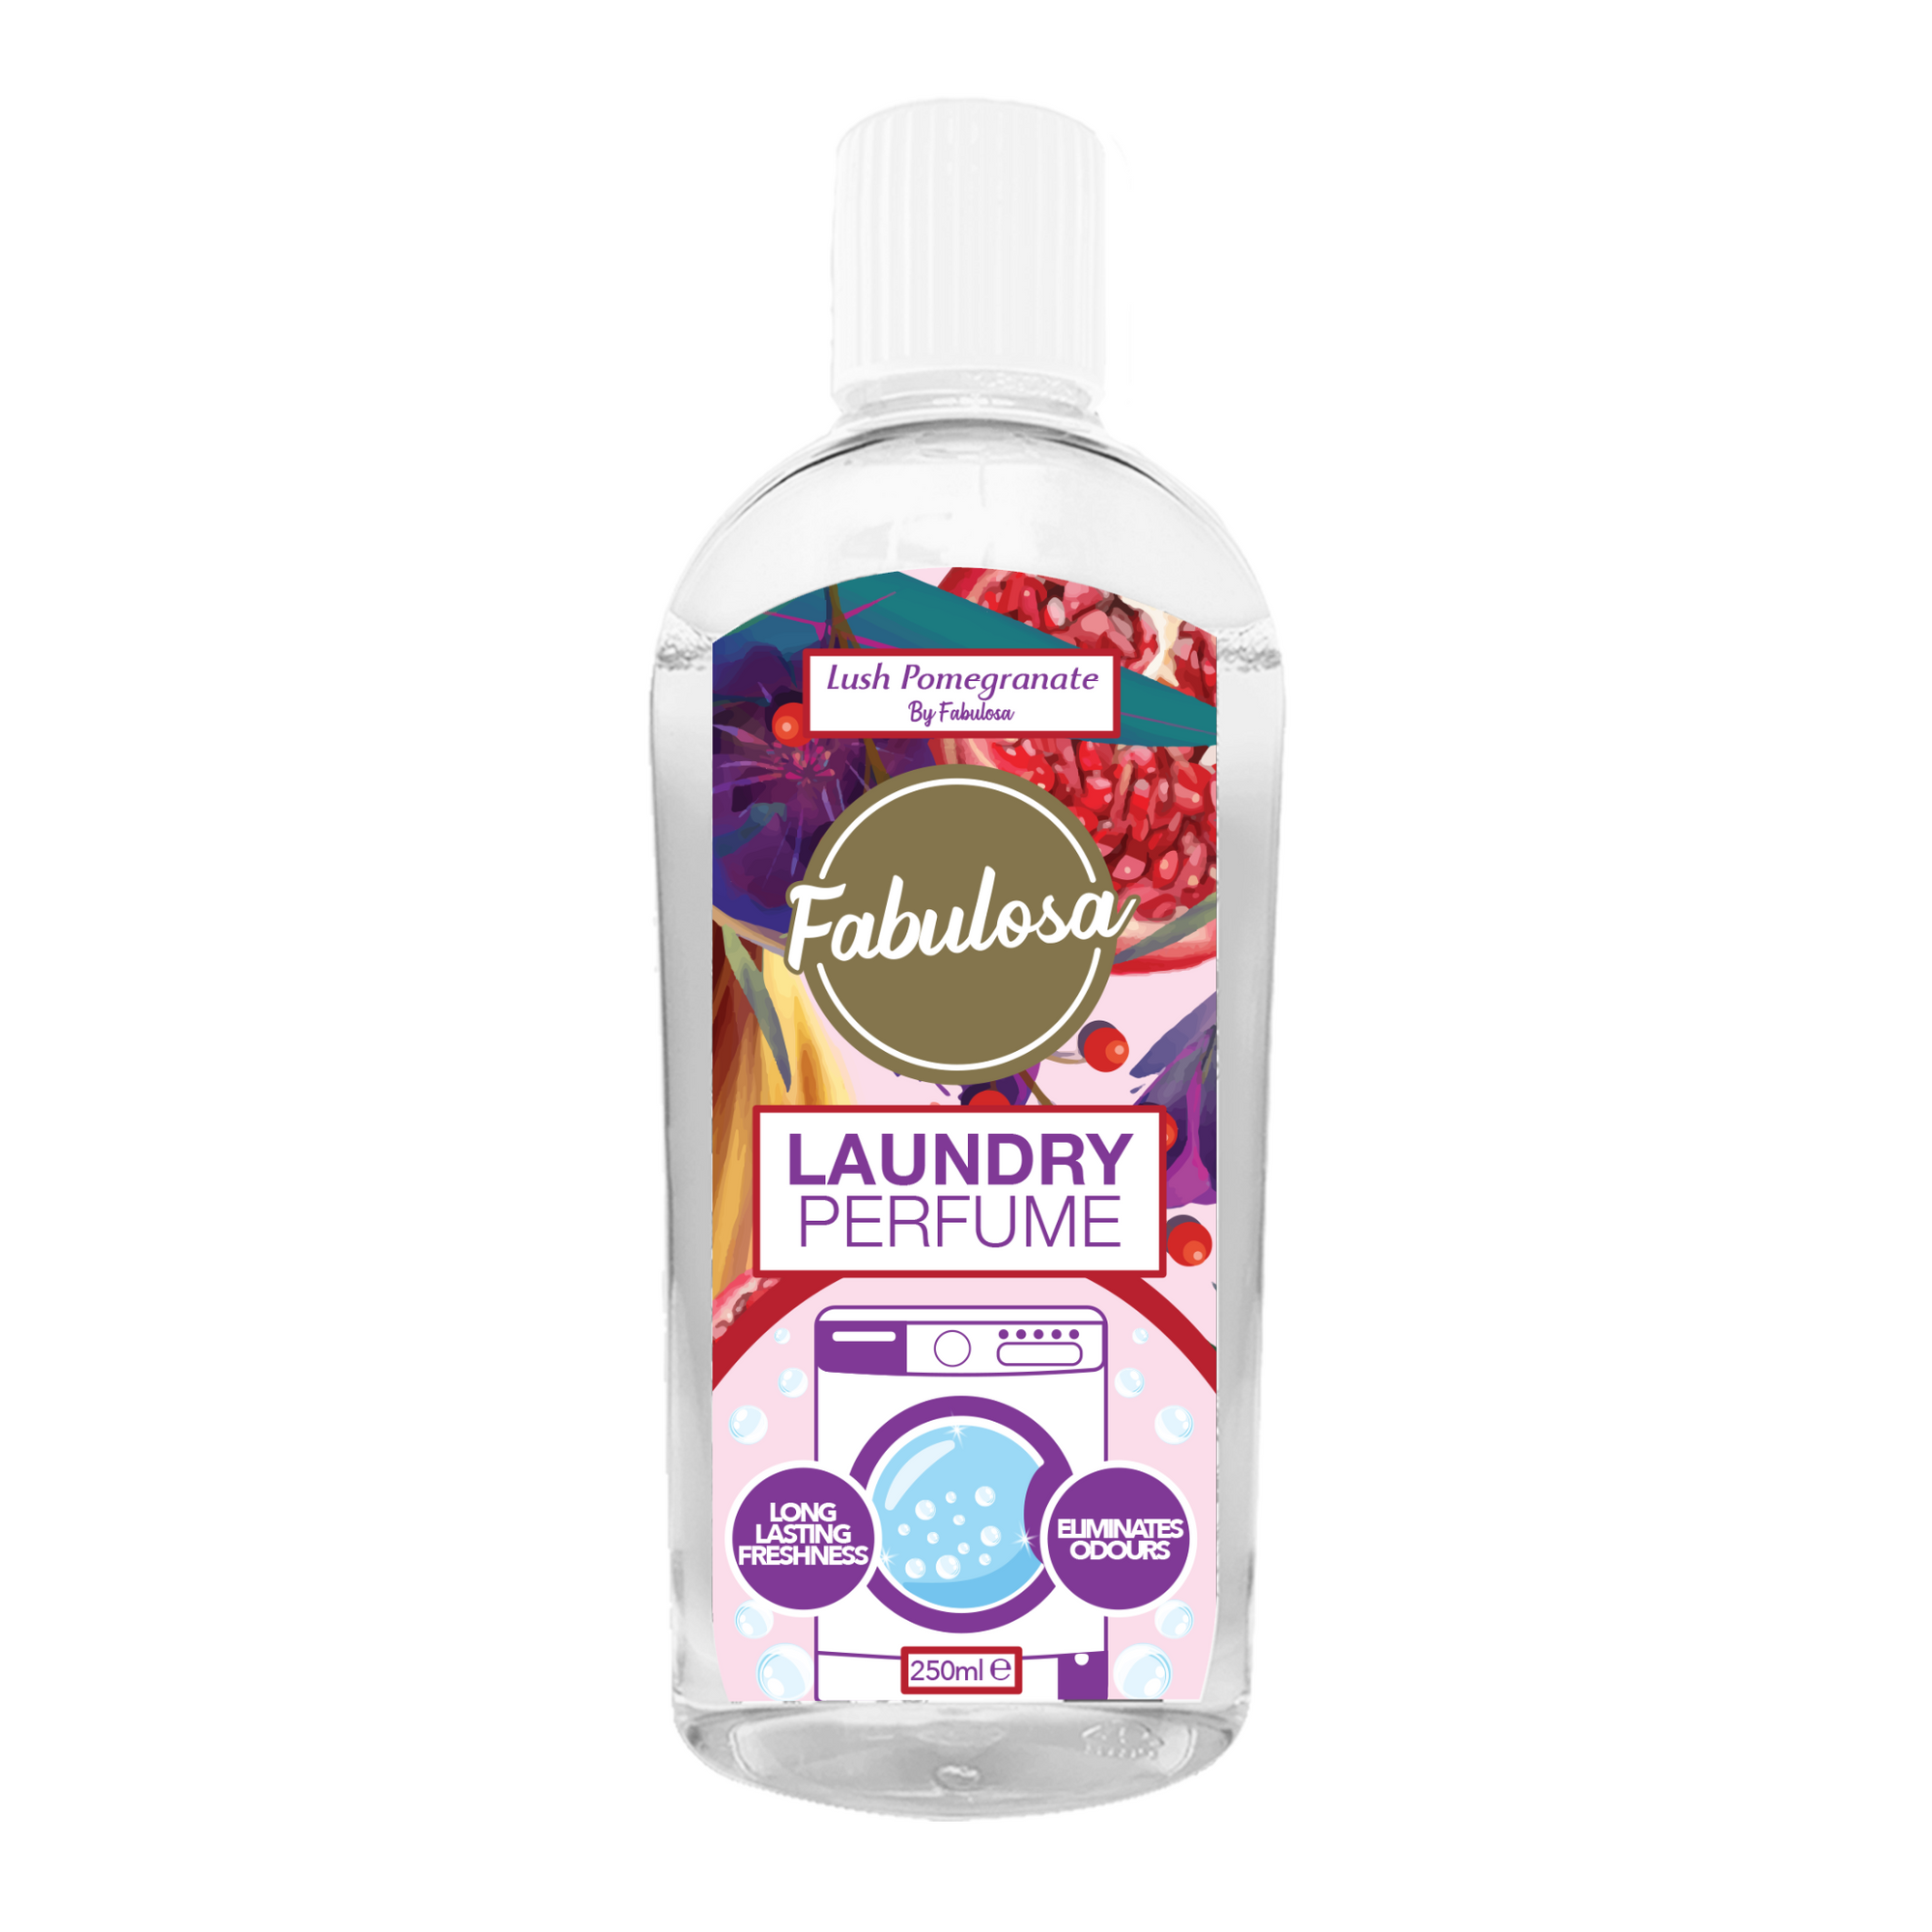 Fabulosa Laundry Perfume - Lush Pomegranate (250ml)